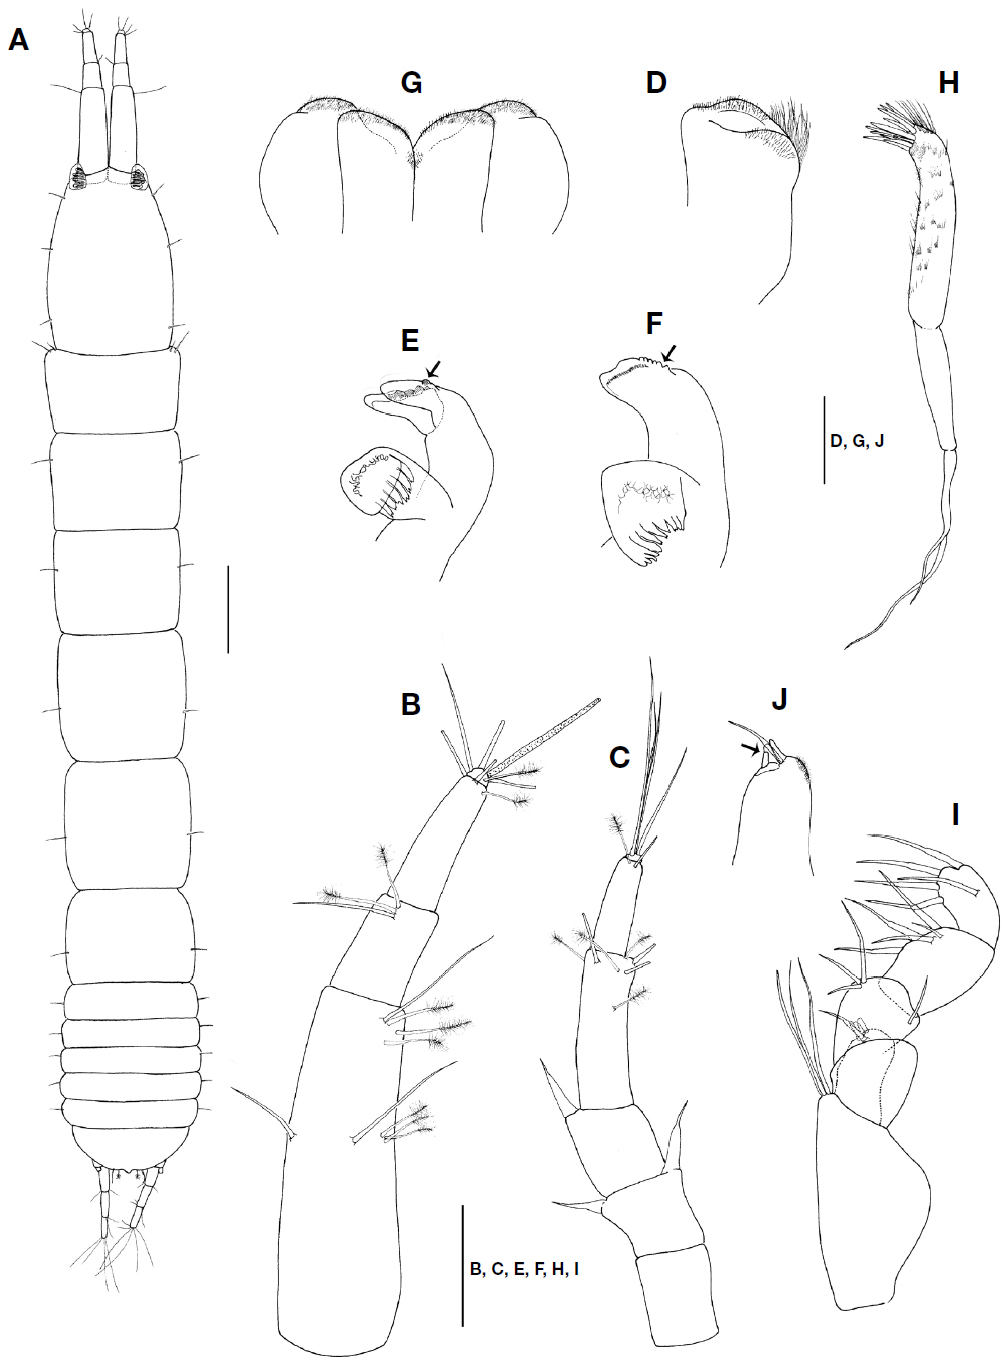 Leptochelia suhi n. sp. female (holotype). A, Habitus, dorsal view; B, Antennule; C, Antenna; D, Labrum; E, Left mandible; F, Right mandible; G, Labium; H, Maxillule; I, Maxilliped; J, Maxilliped endite. Scale bars=0.2 mm (A), 0.1 mm (B, C, E, F, H, I), 0.05 mm (D, G, J).